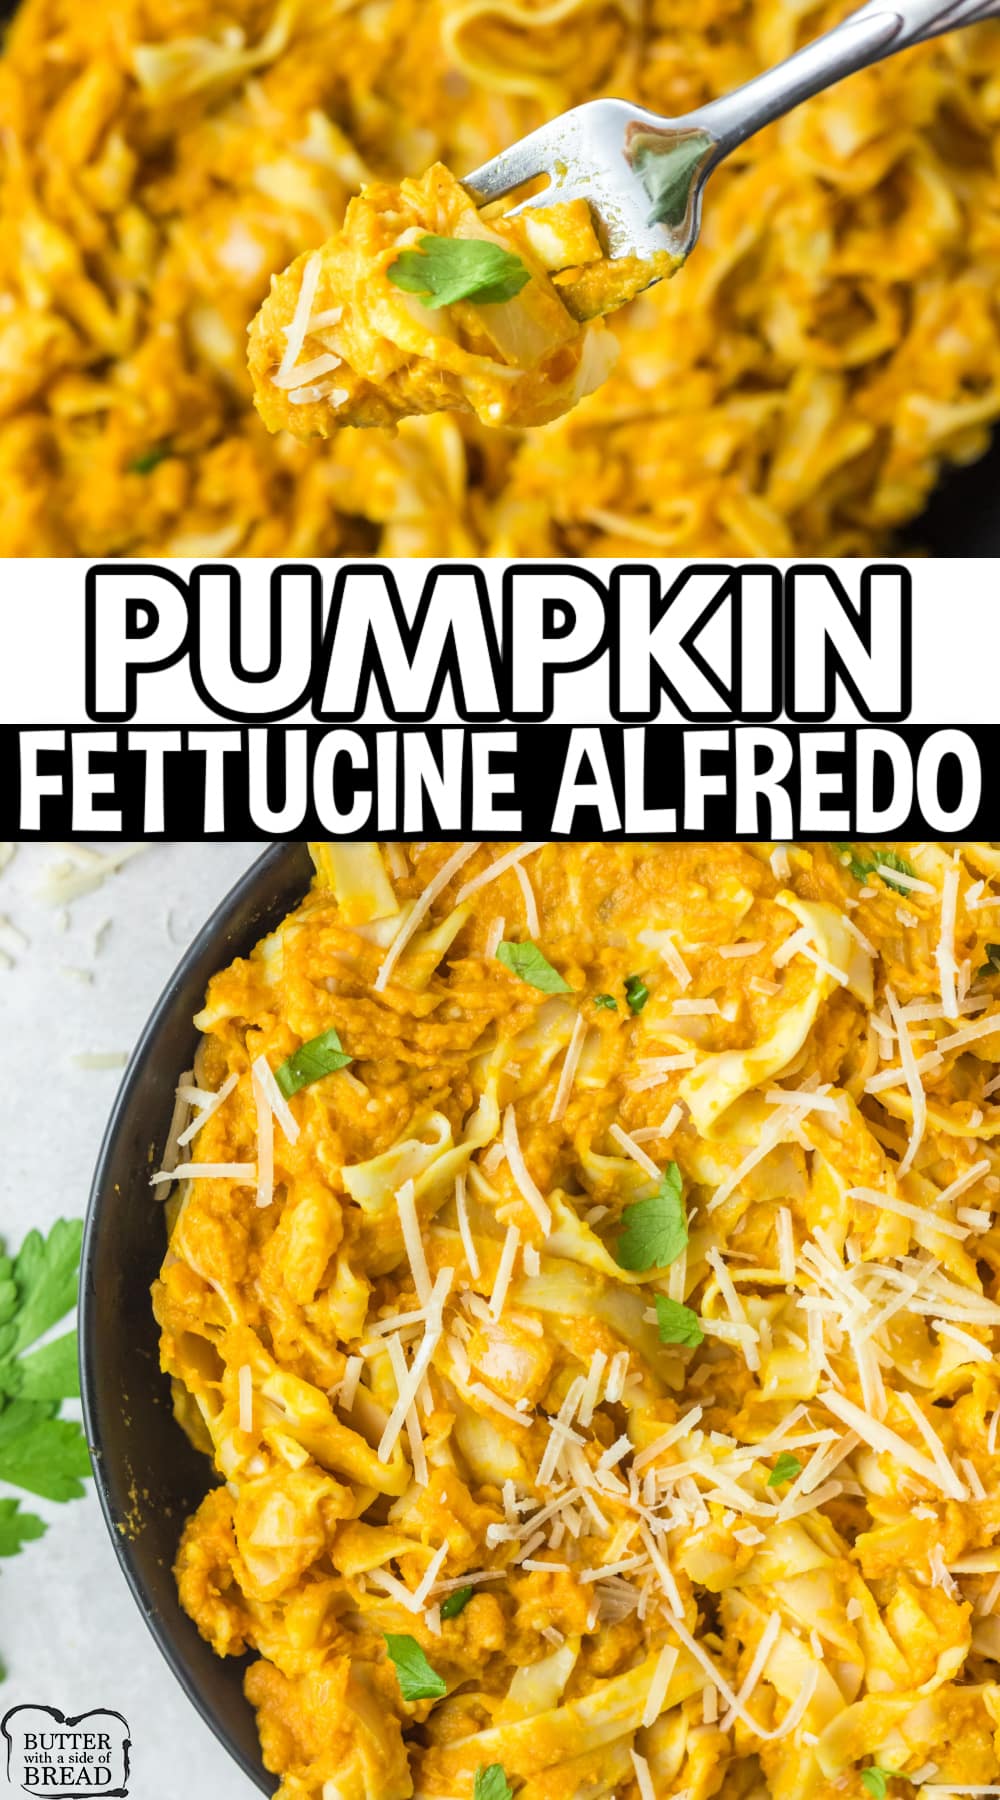 Pumpkin Fettucine Alfredo made with pumpkin puree, half and half cream, and parmesan cheese. The perfect fall twist on my favorite pasta recipe! 